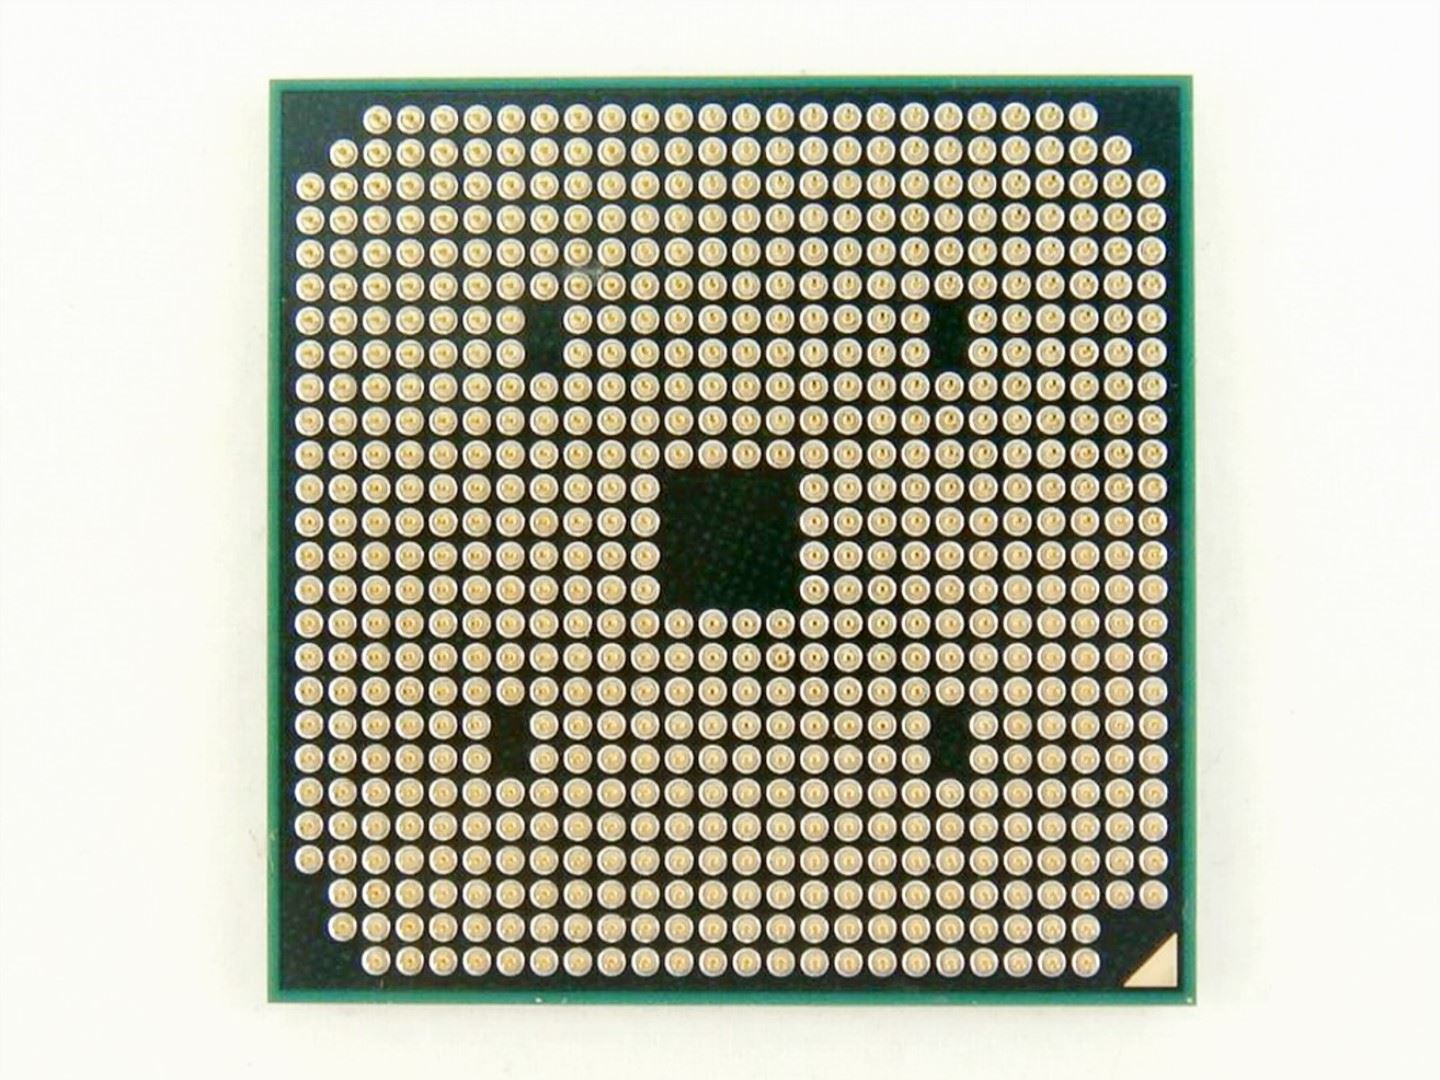 AMD RM-74 CPU